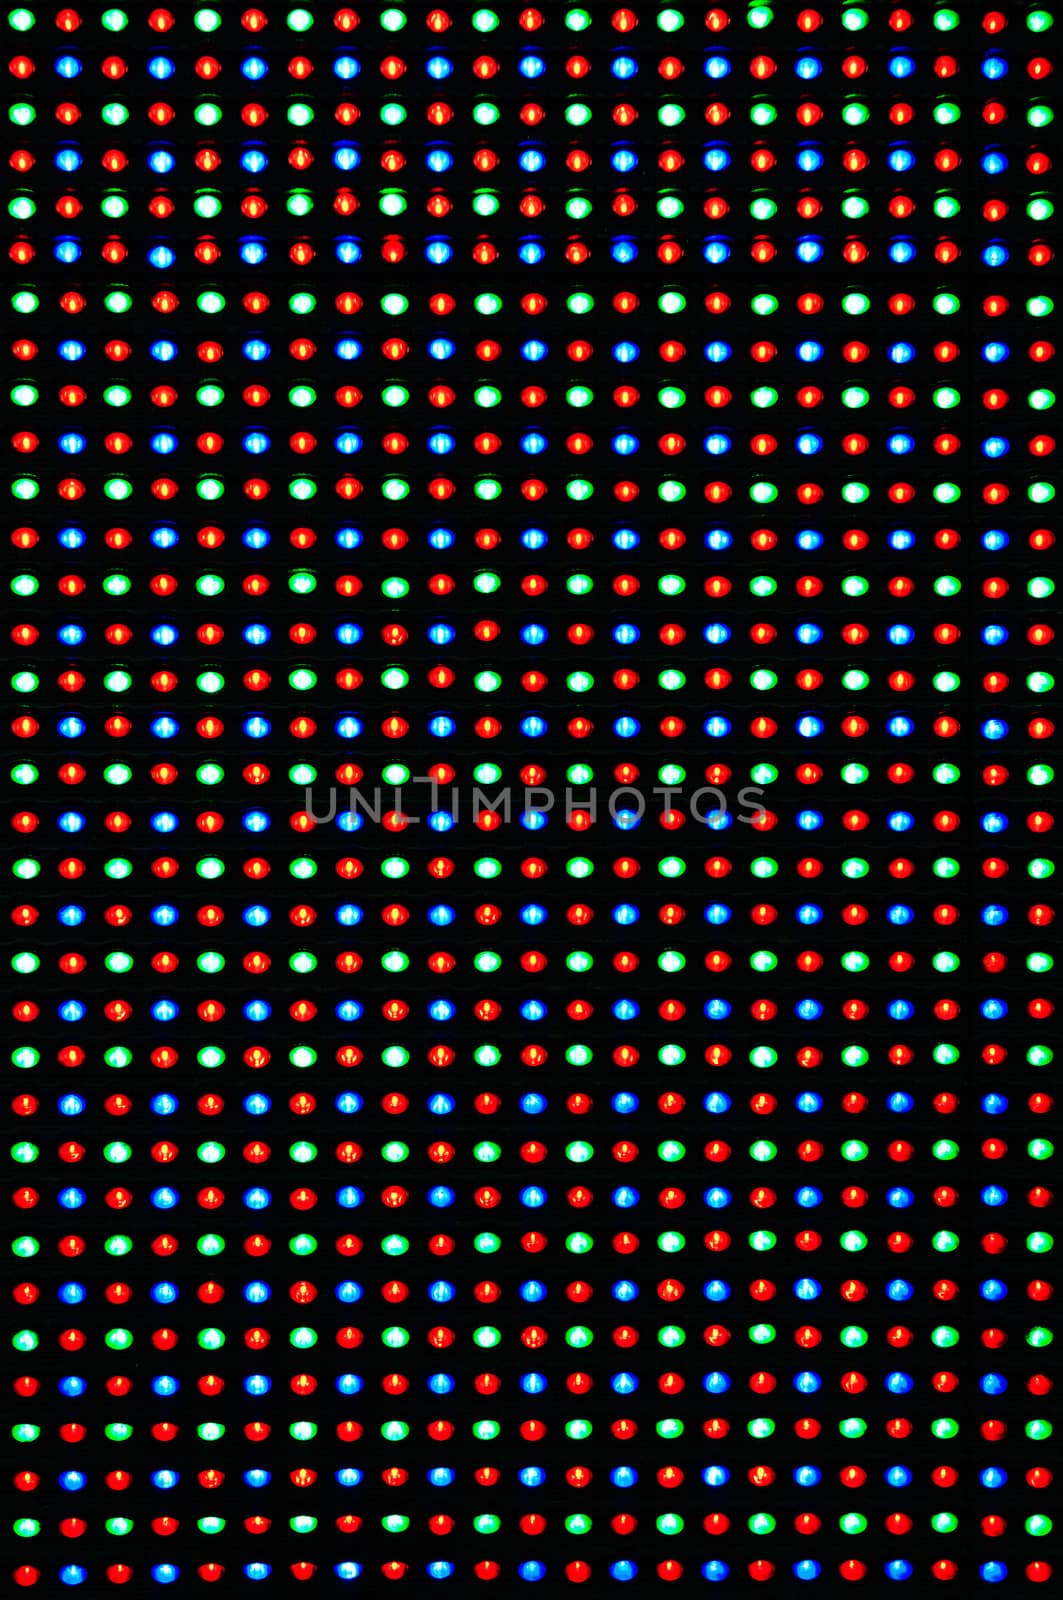 LED display close up by stevanovicigor